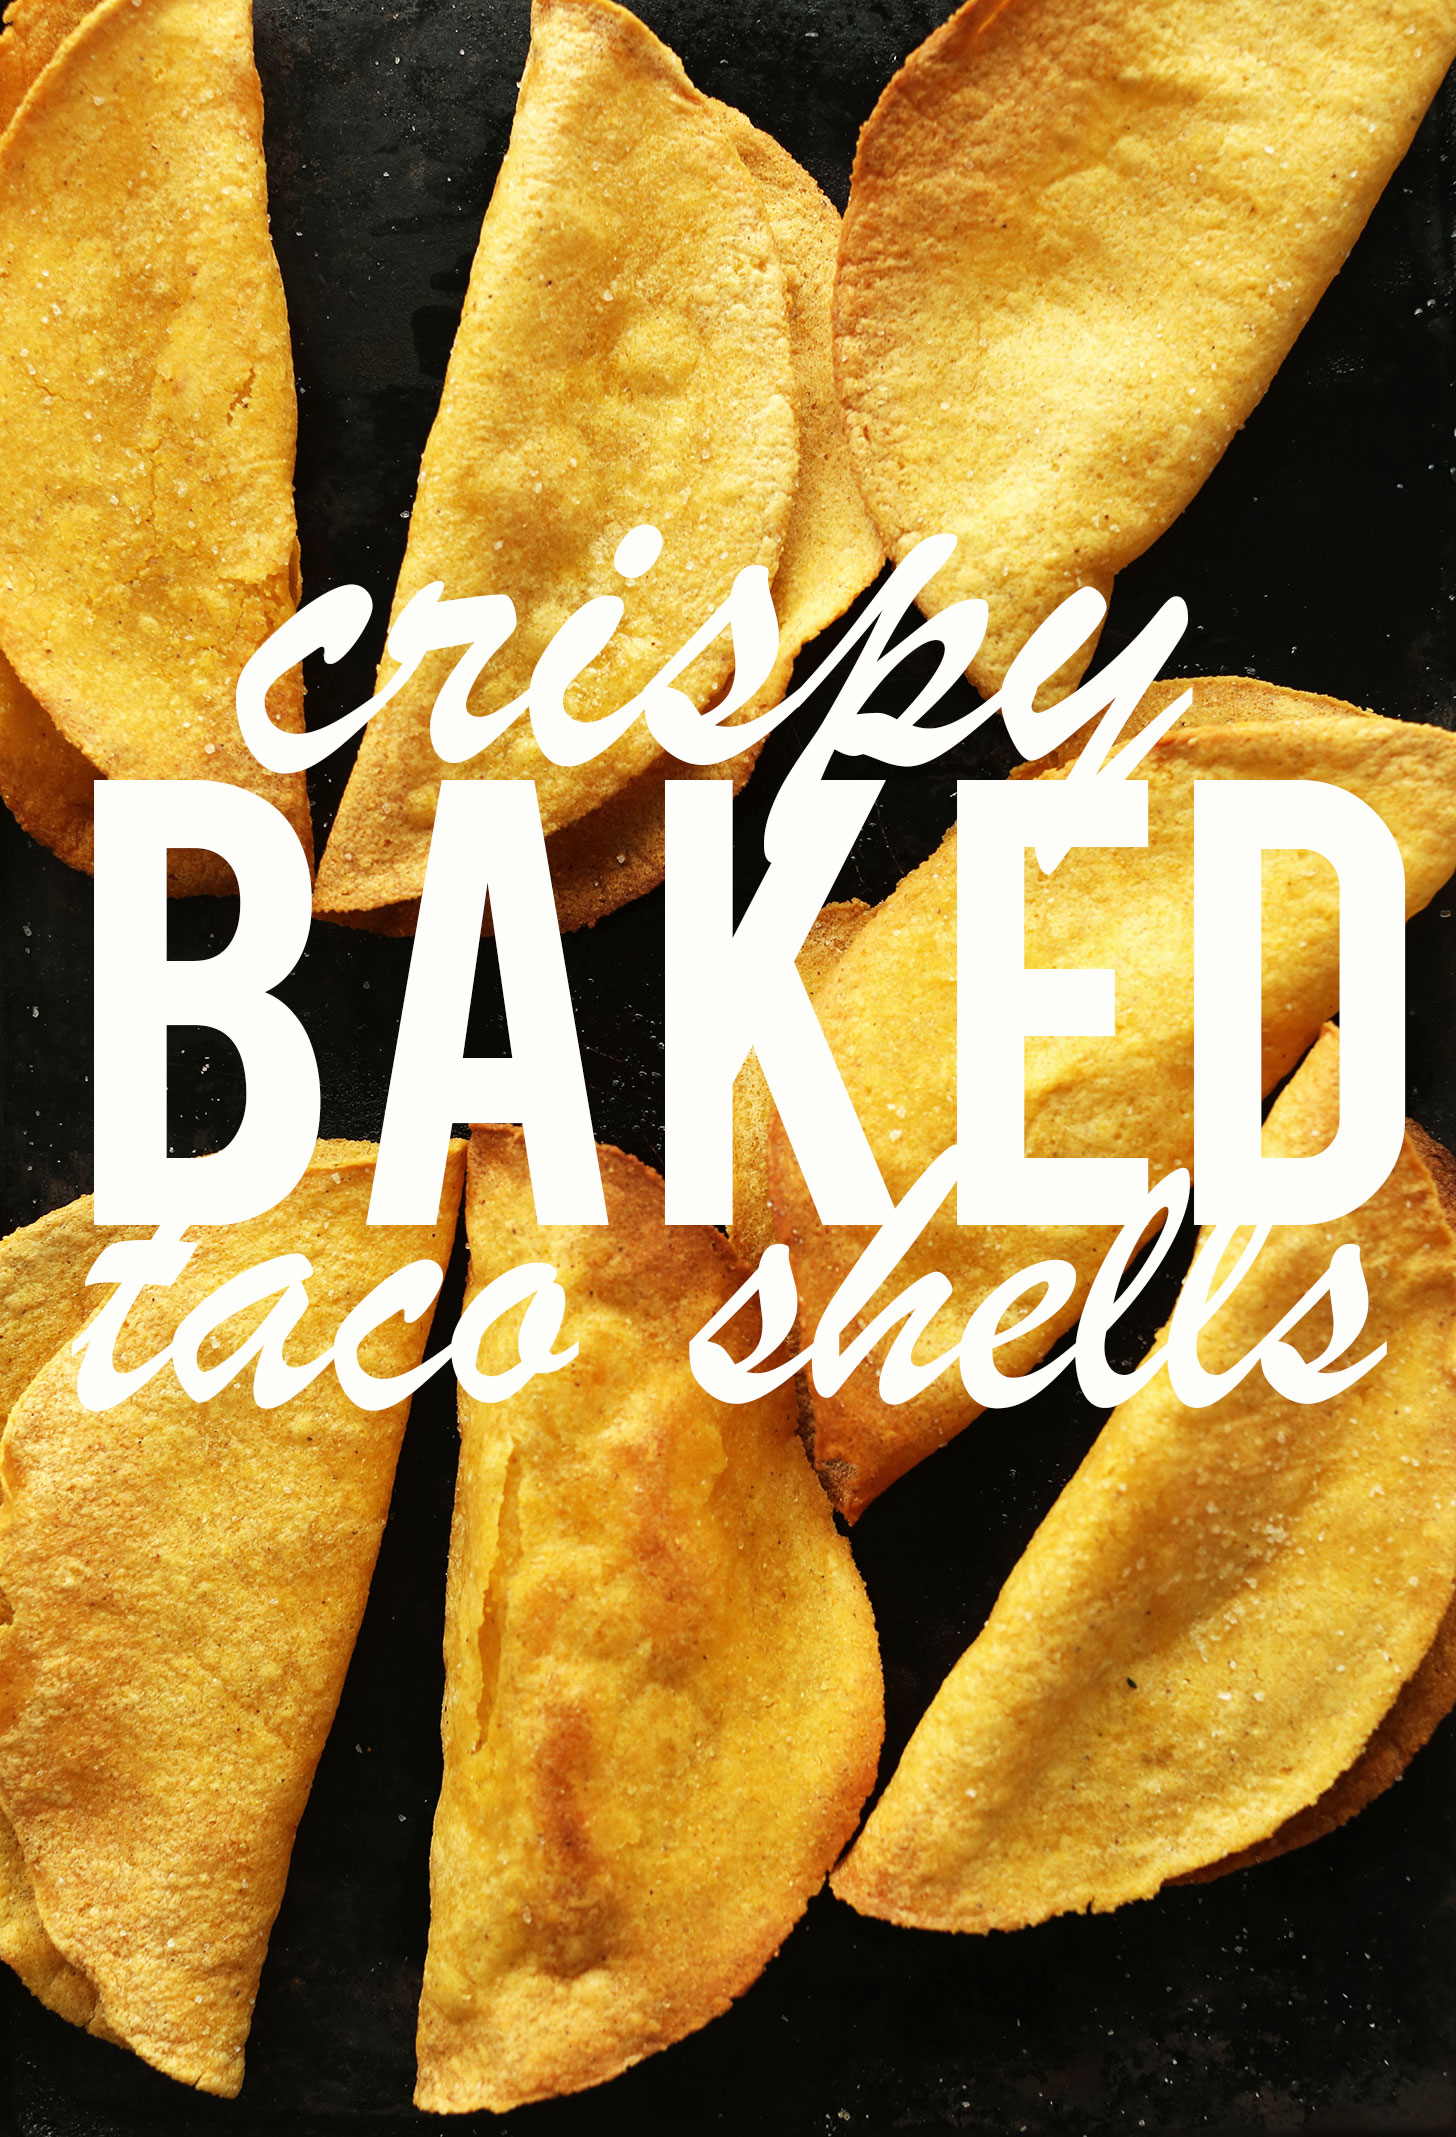 EASY Crispy Baked Taco Shells! #vegan #glutenfree #healthy #recipe #minimalistbaker